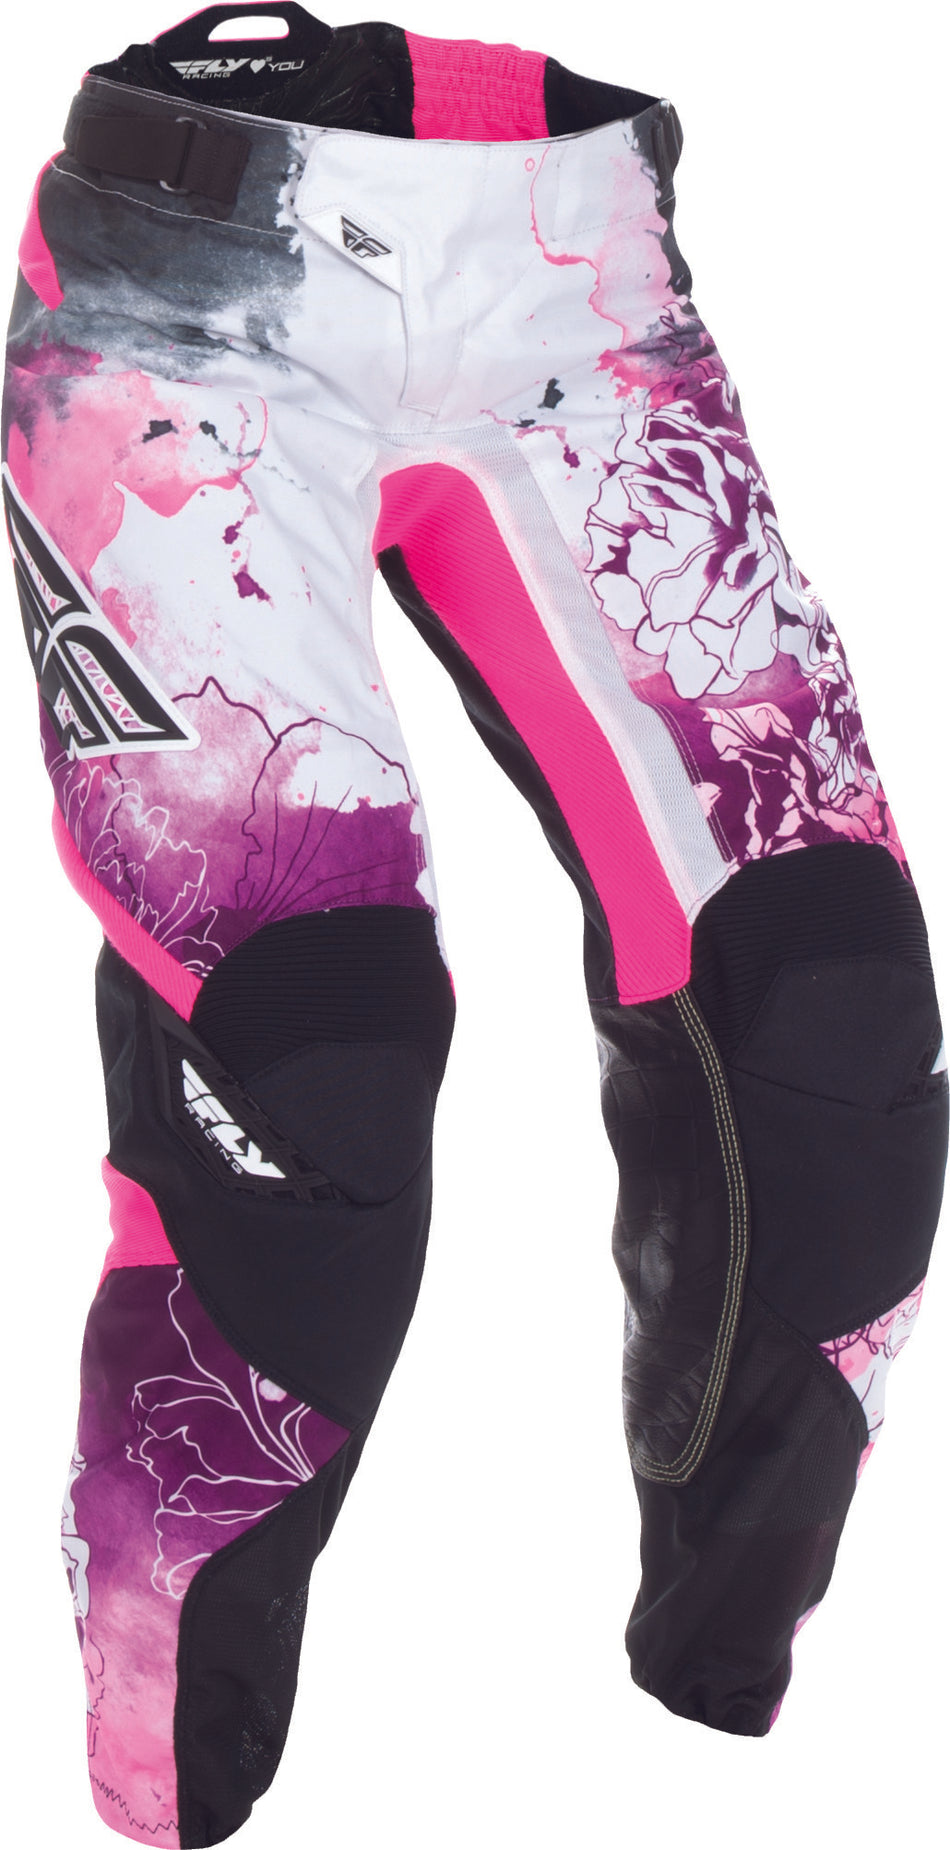 FLY RACING Kinetic Women's Race Pant Pink/Purple Sz 15/16 370-63211